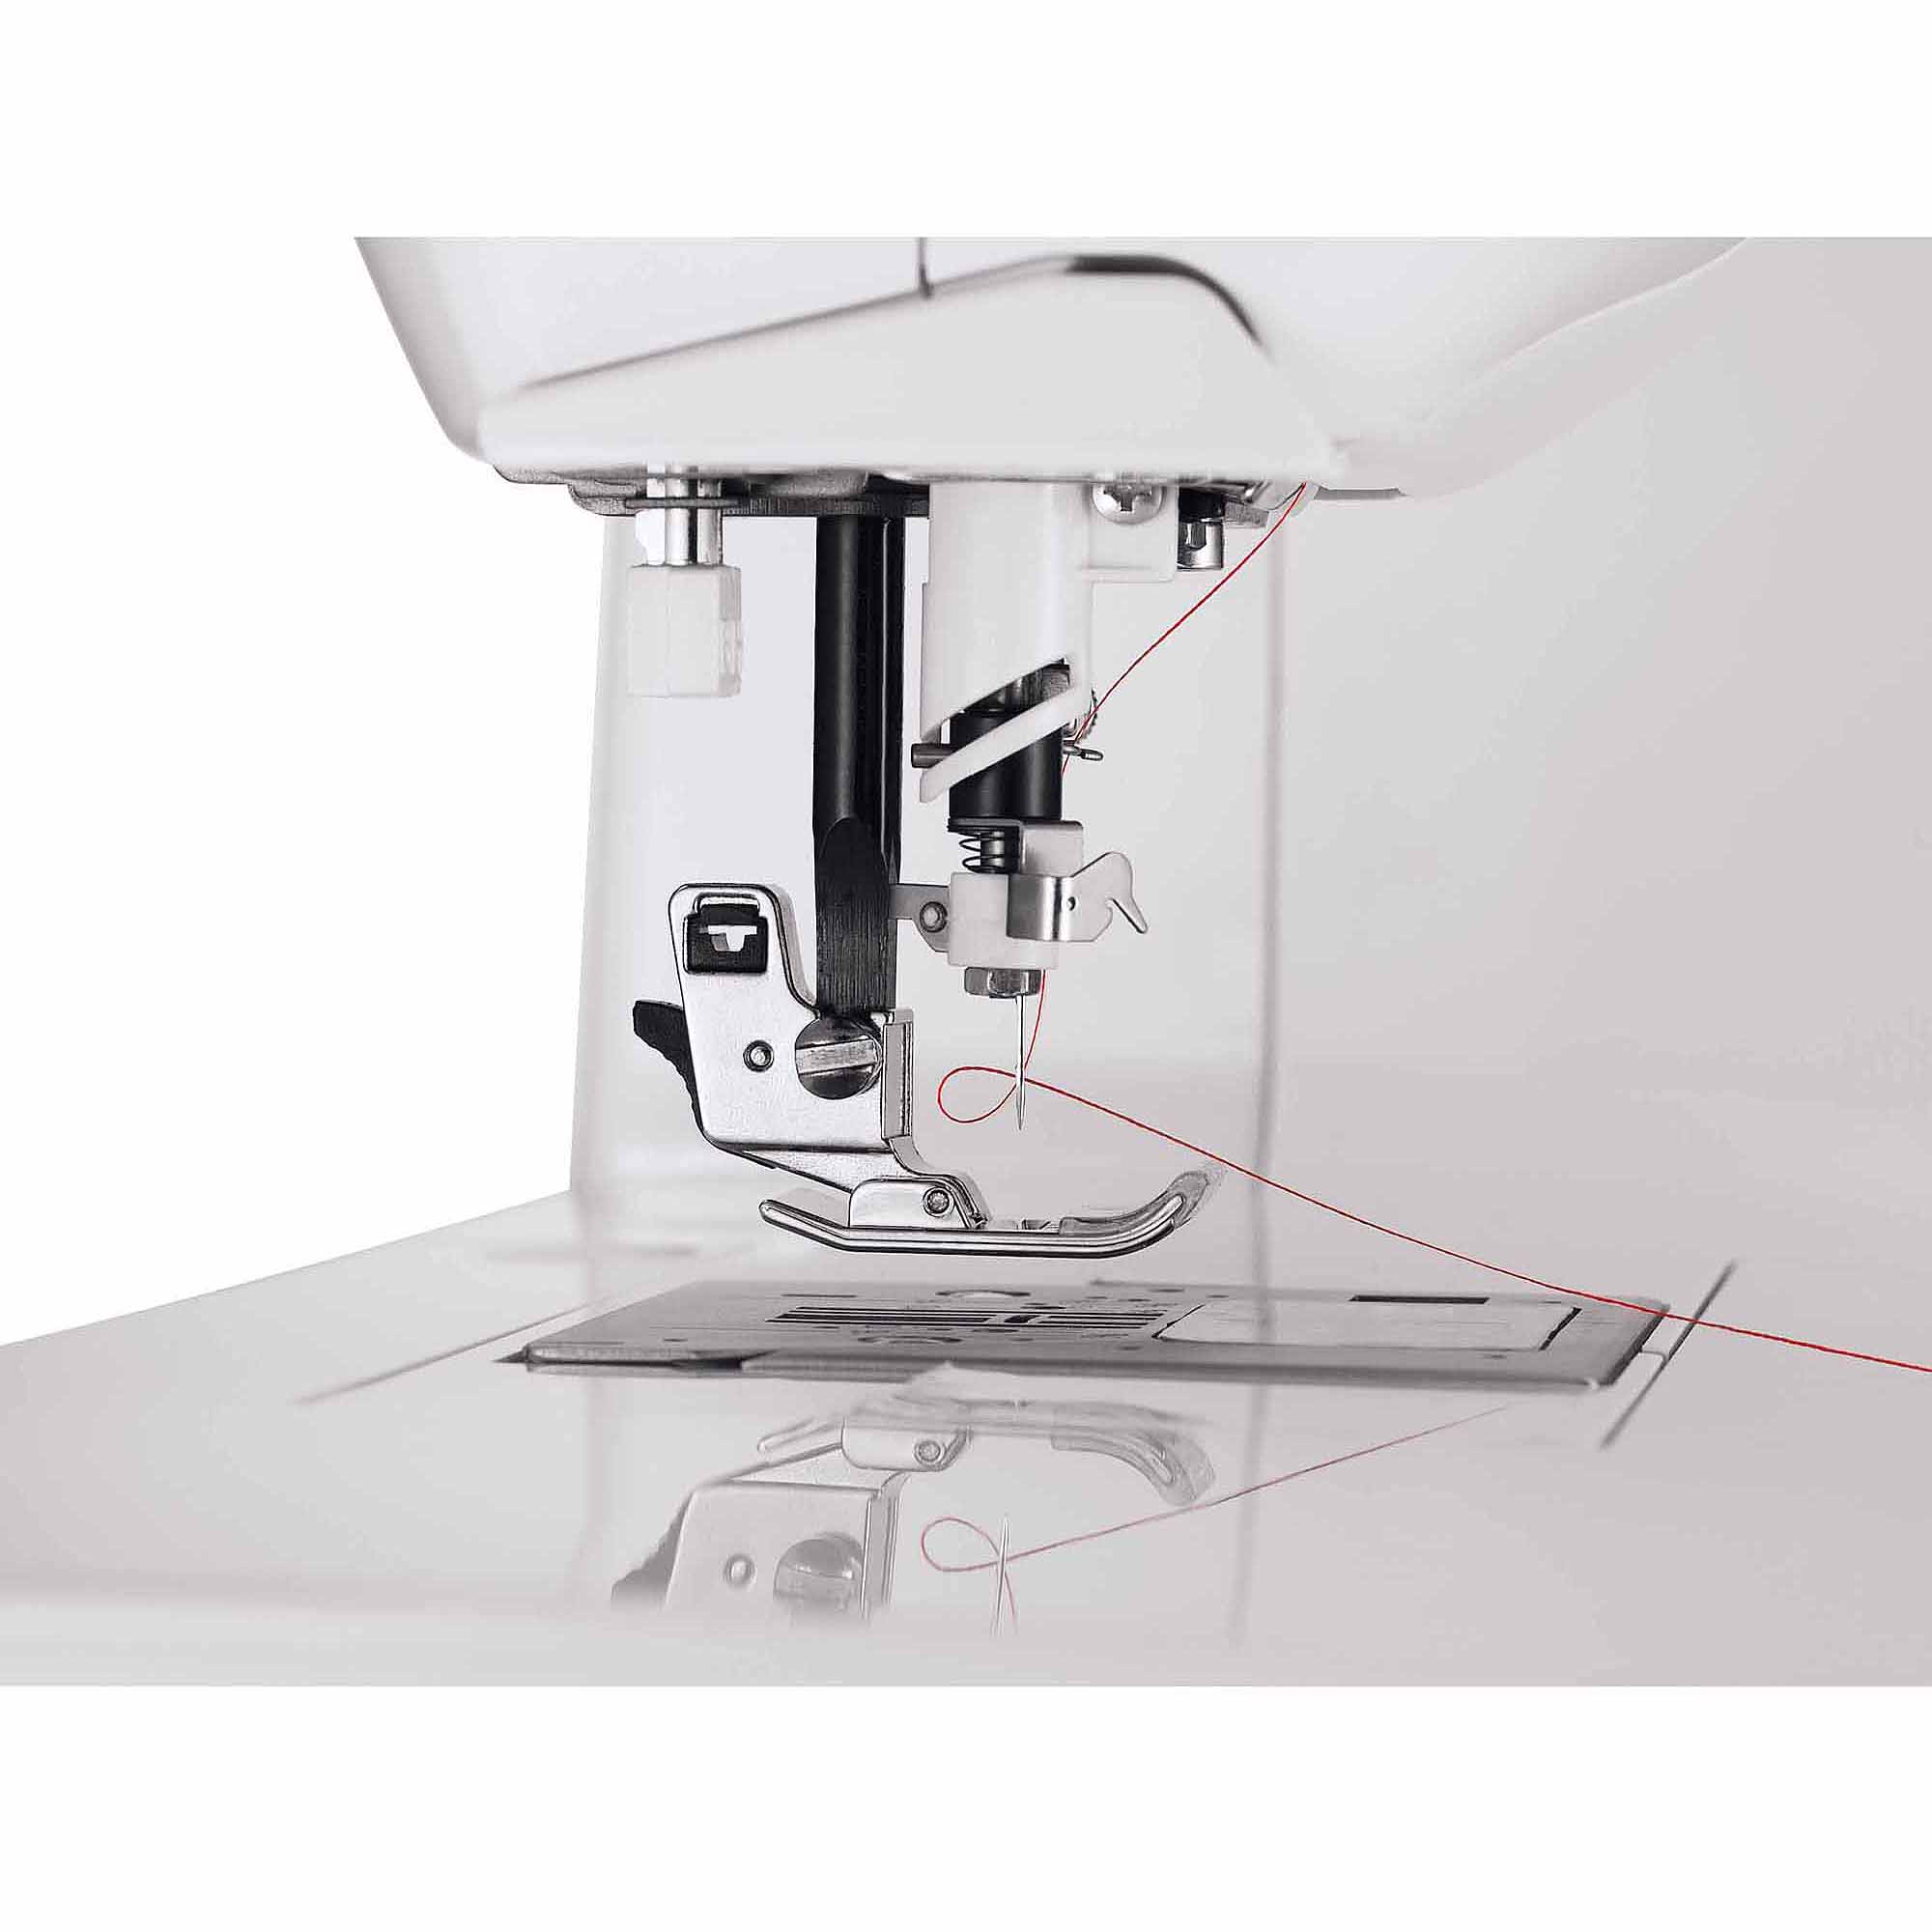 SINGER ® One 24-Stitch Sewing Machine - image 3 of 6